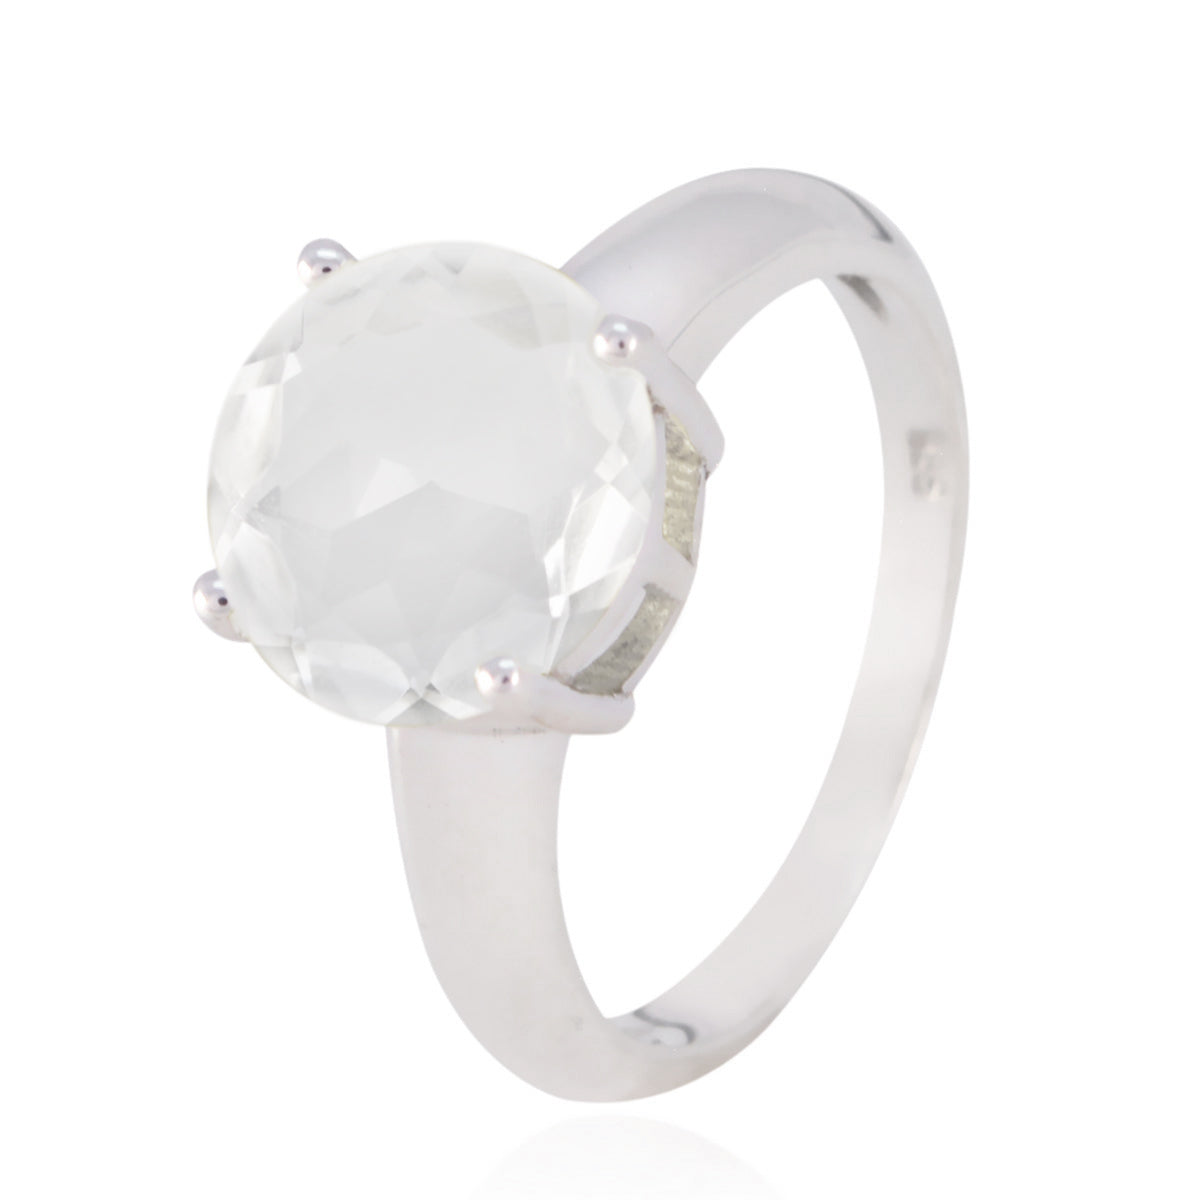 Presentable Gemstone Crystal Quartz Sterling Silver Rings Yoga Jewelry